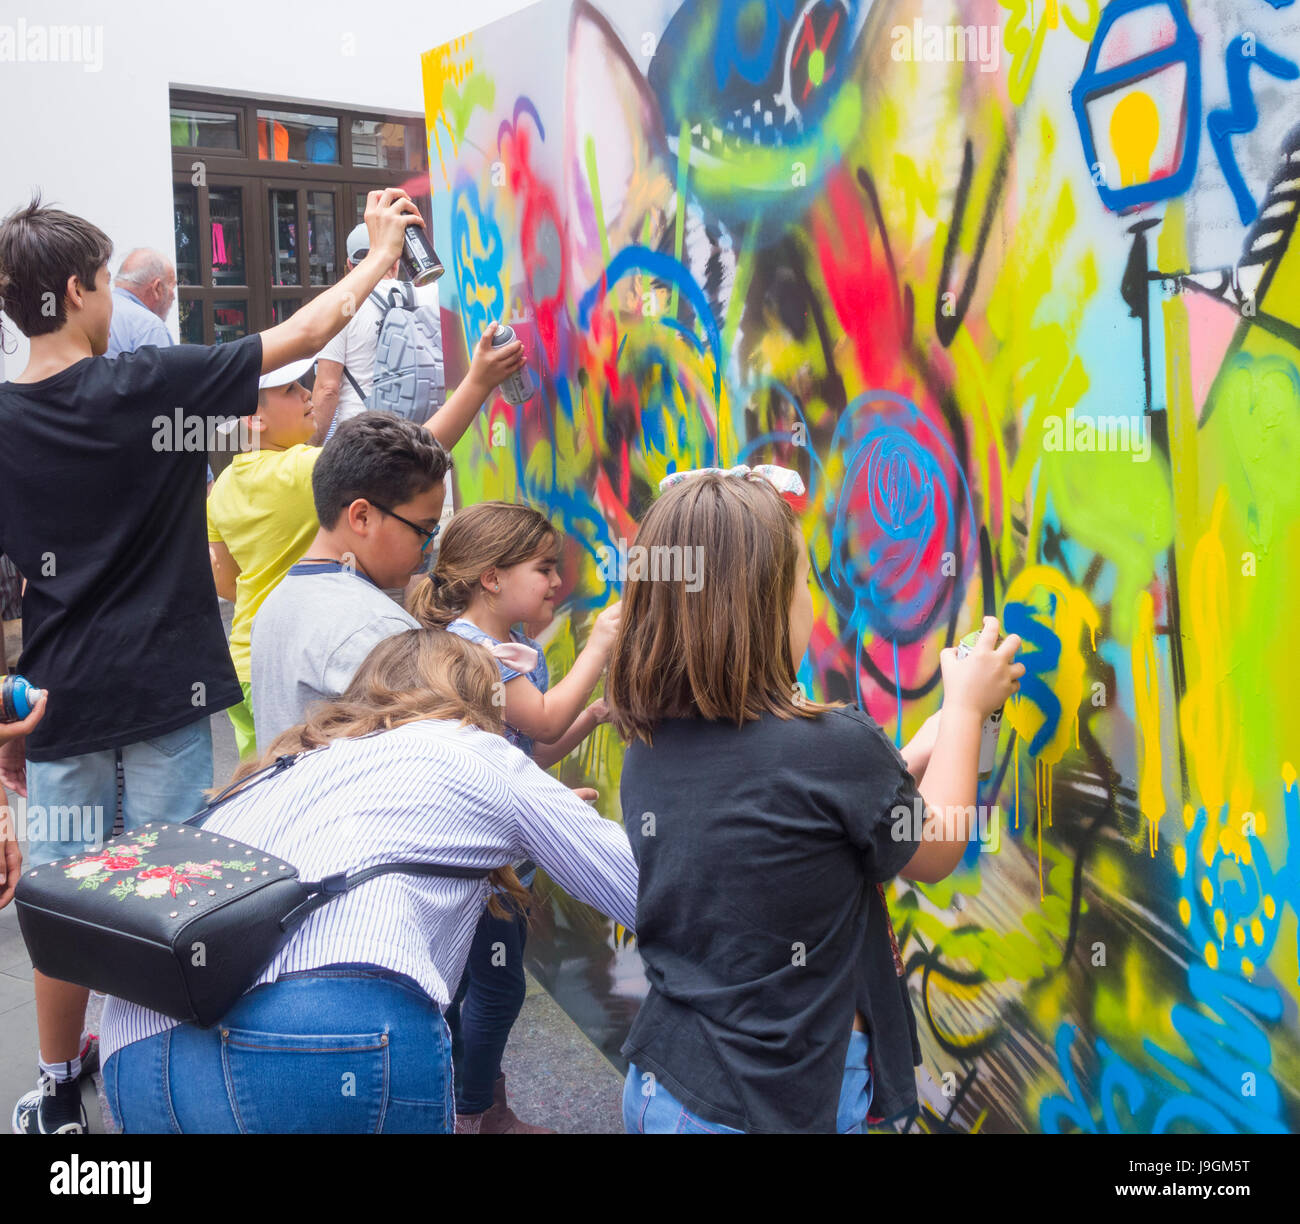 Image result for Graffiti arts event